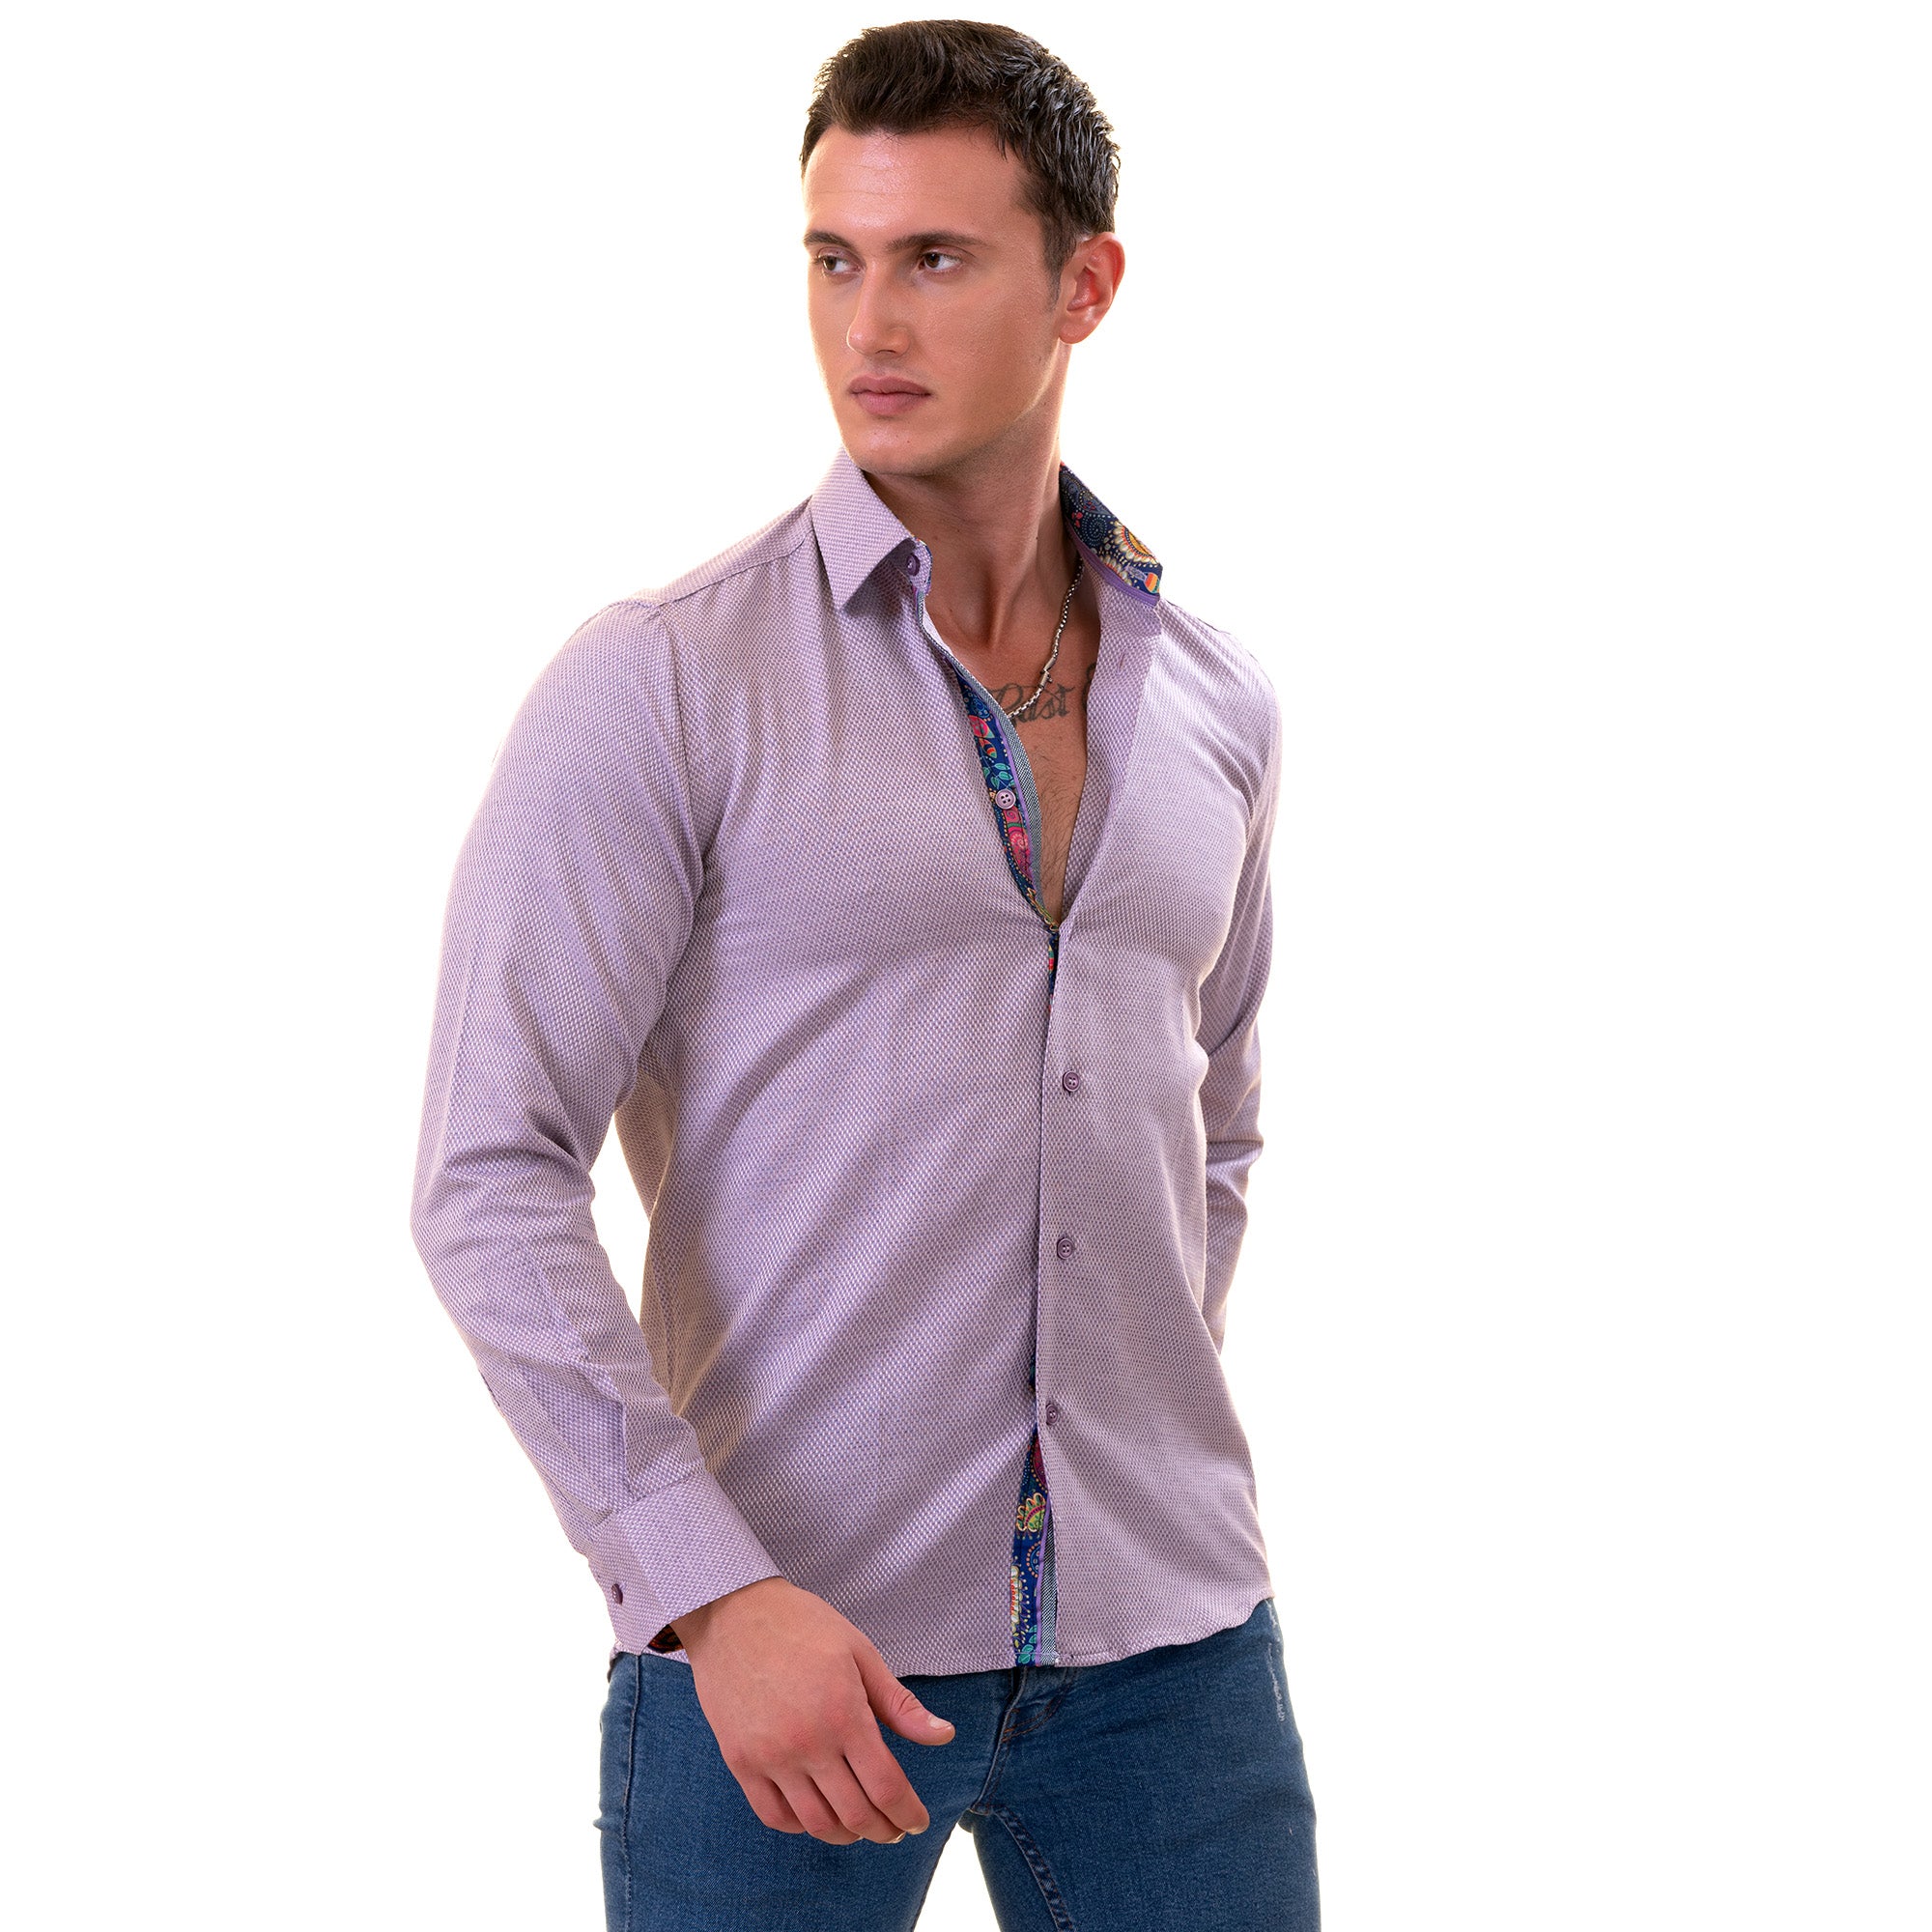 Purple Jackquard Men's  Slim Fit Designer Dress Shirt - Tailored Cotton Shirts for Work and Casual Wear